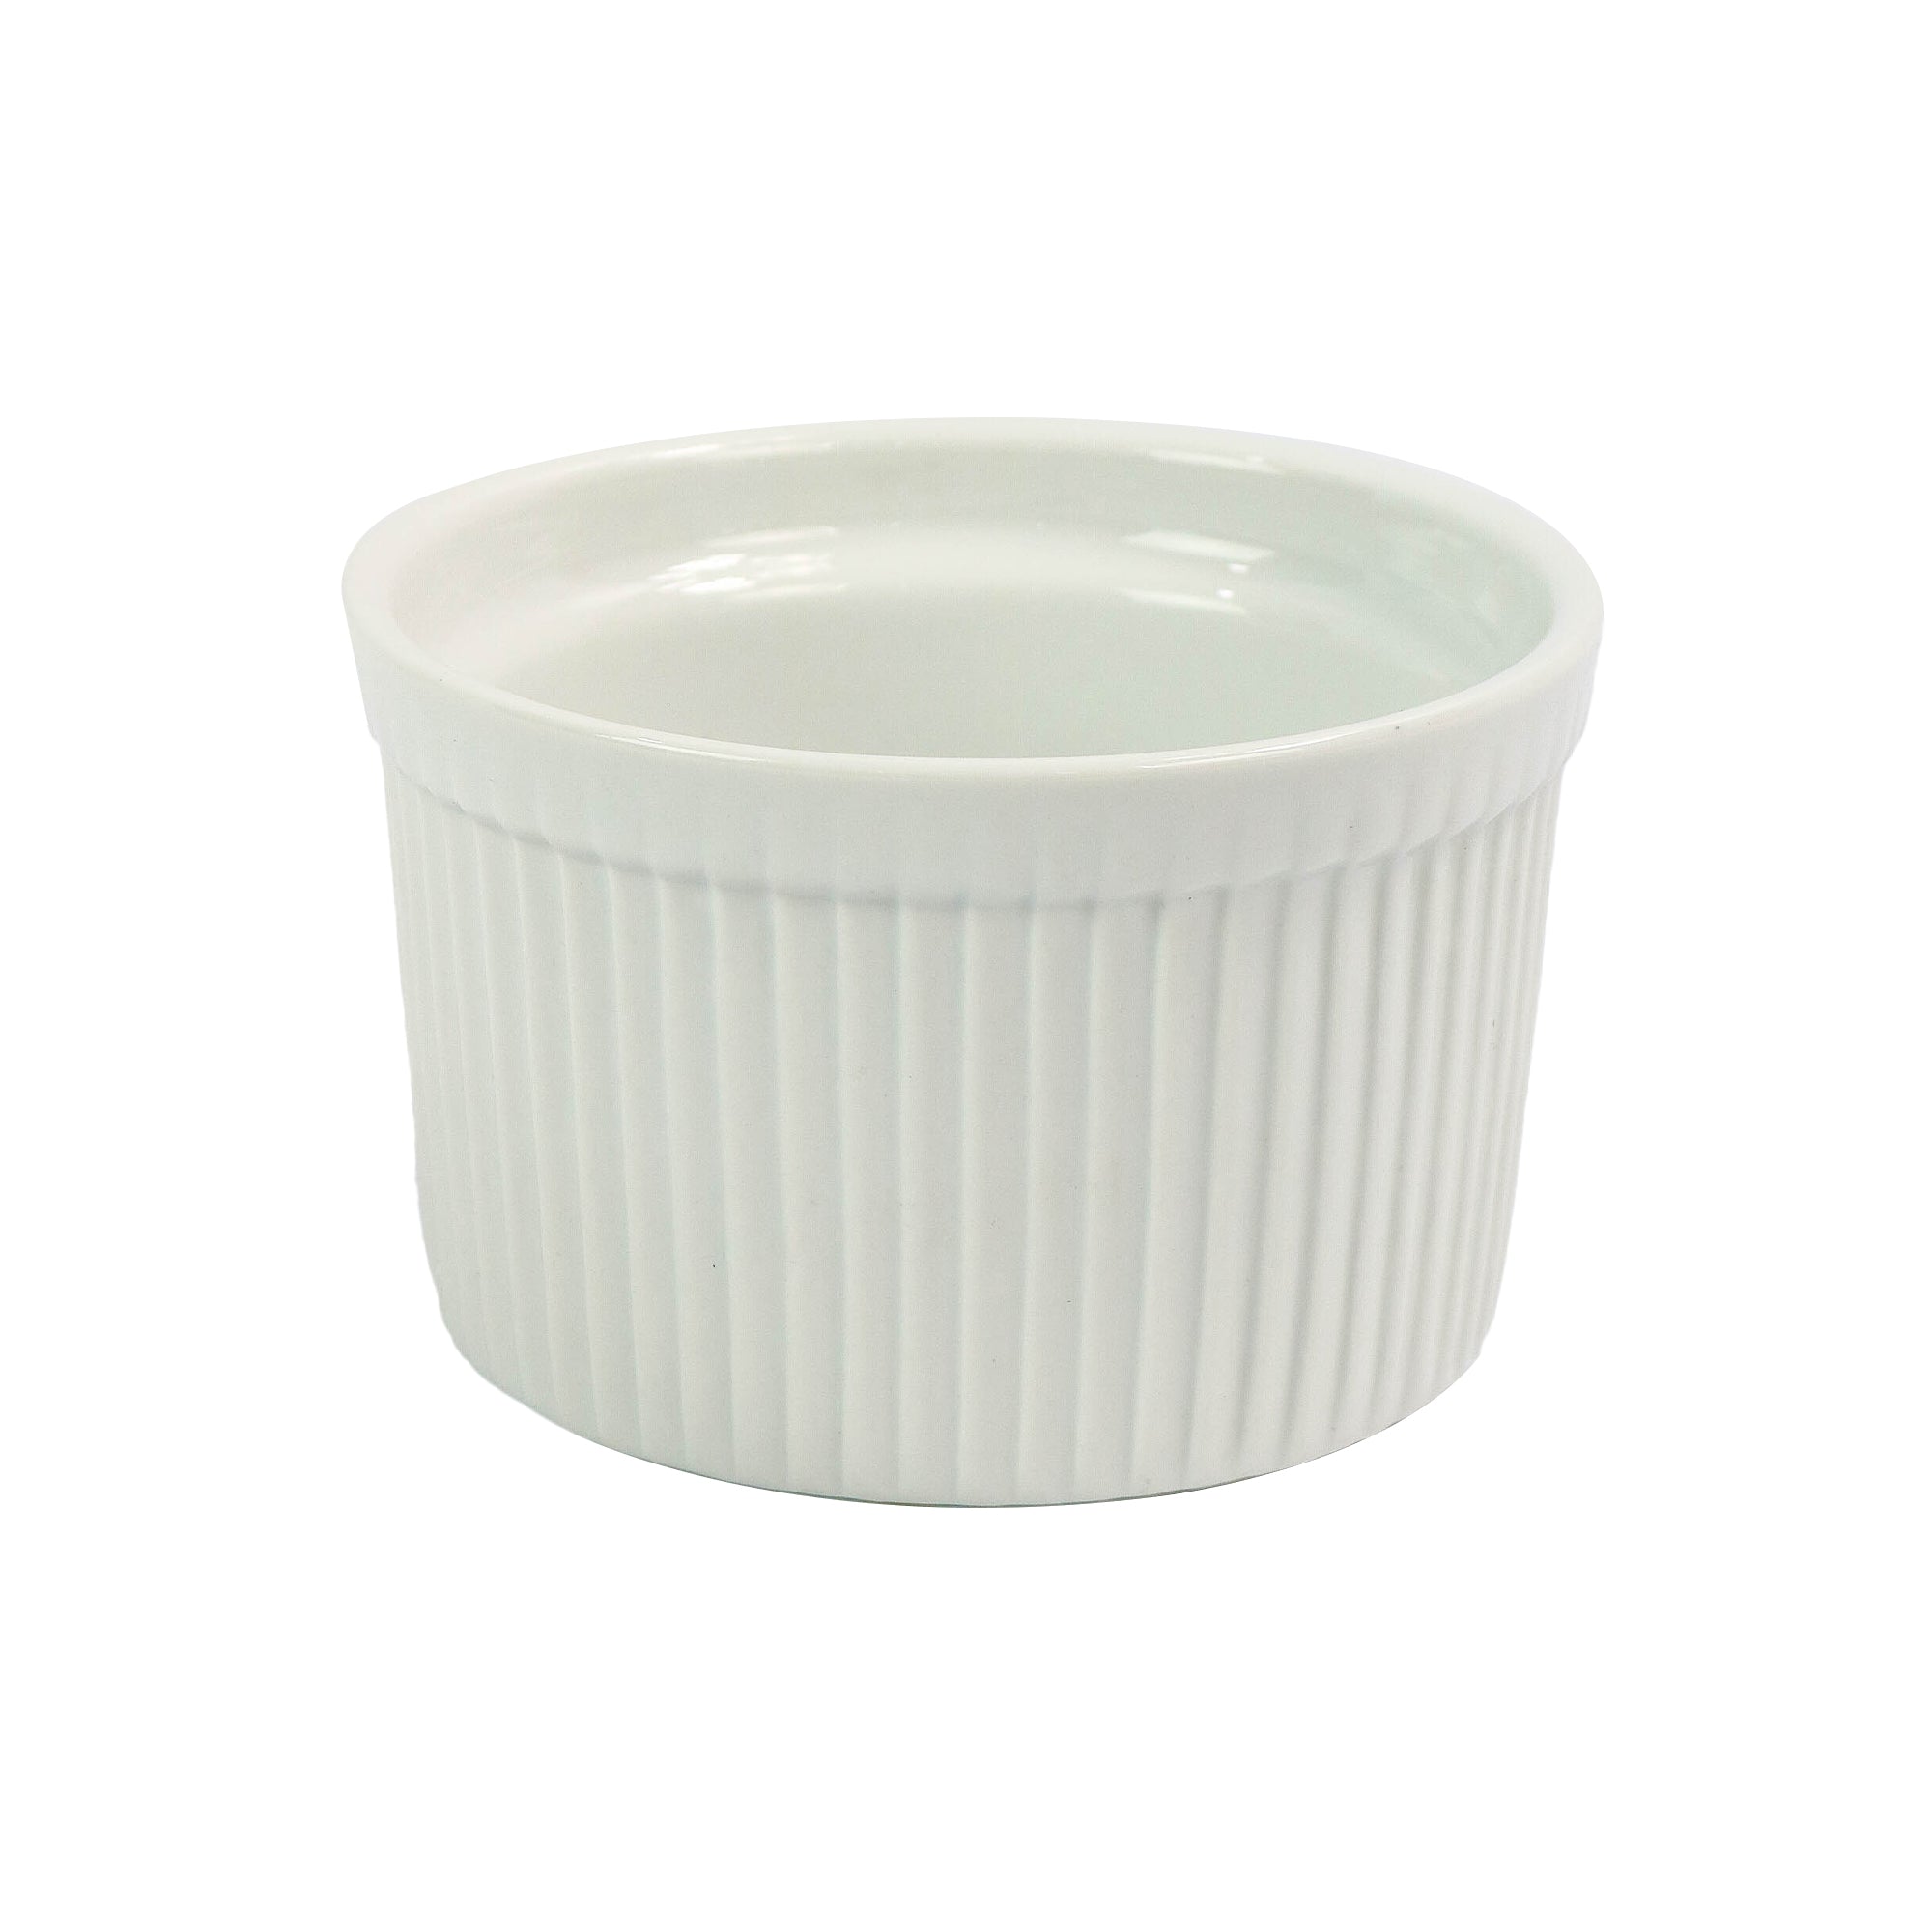 Ramekin Ceramic Ribbed 5inch 12.5x8cm White Baking Round Bowl